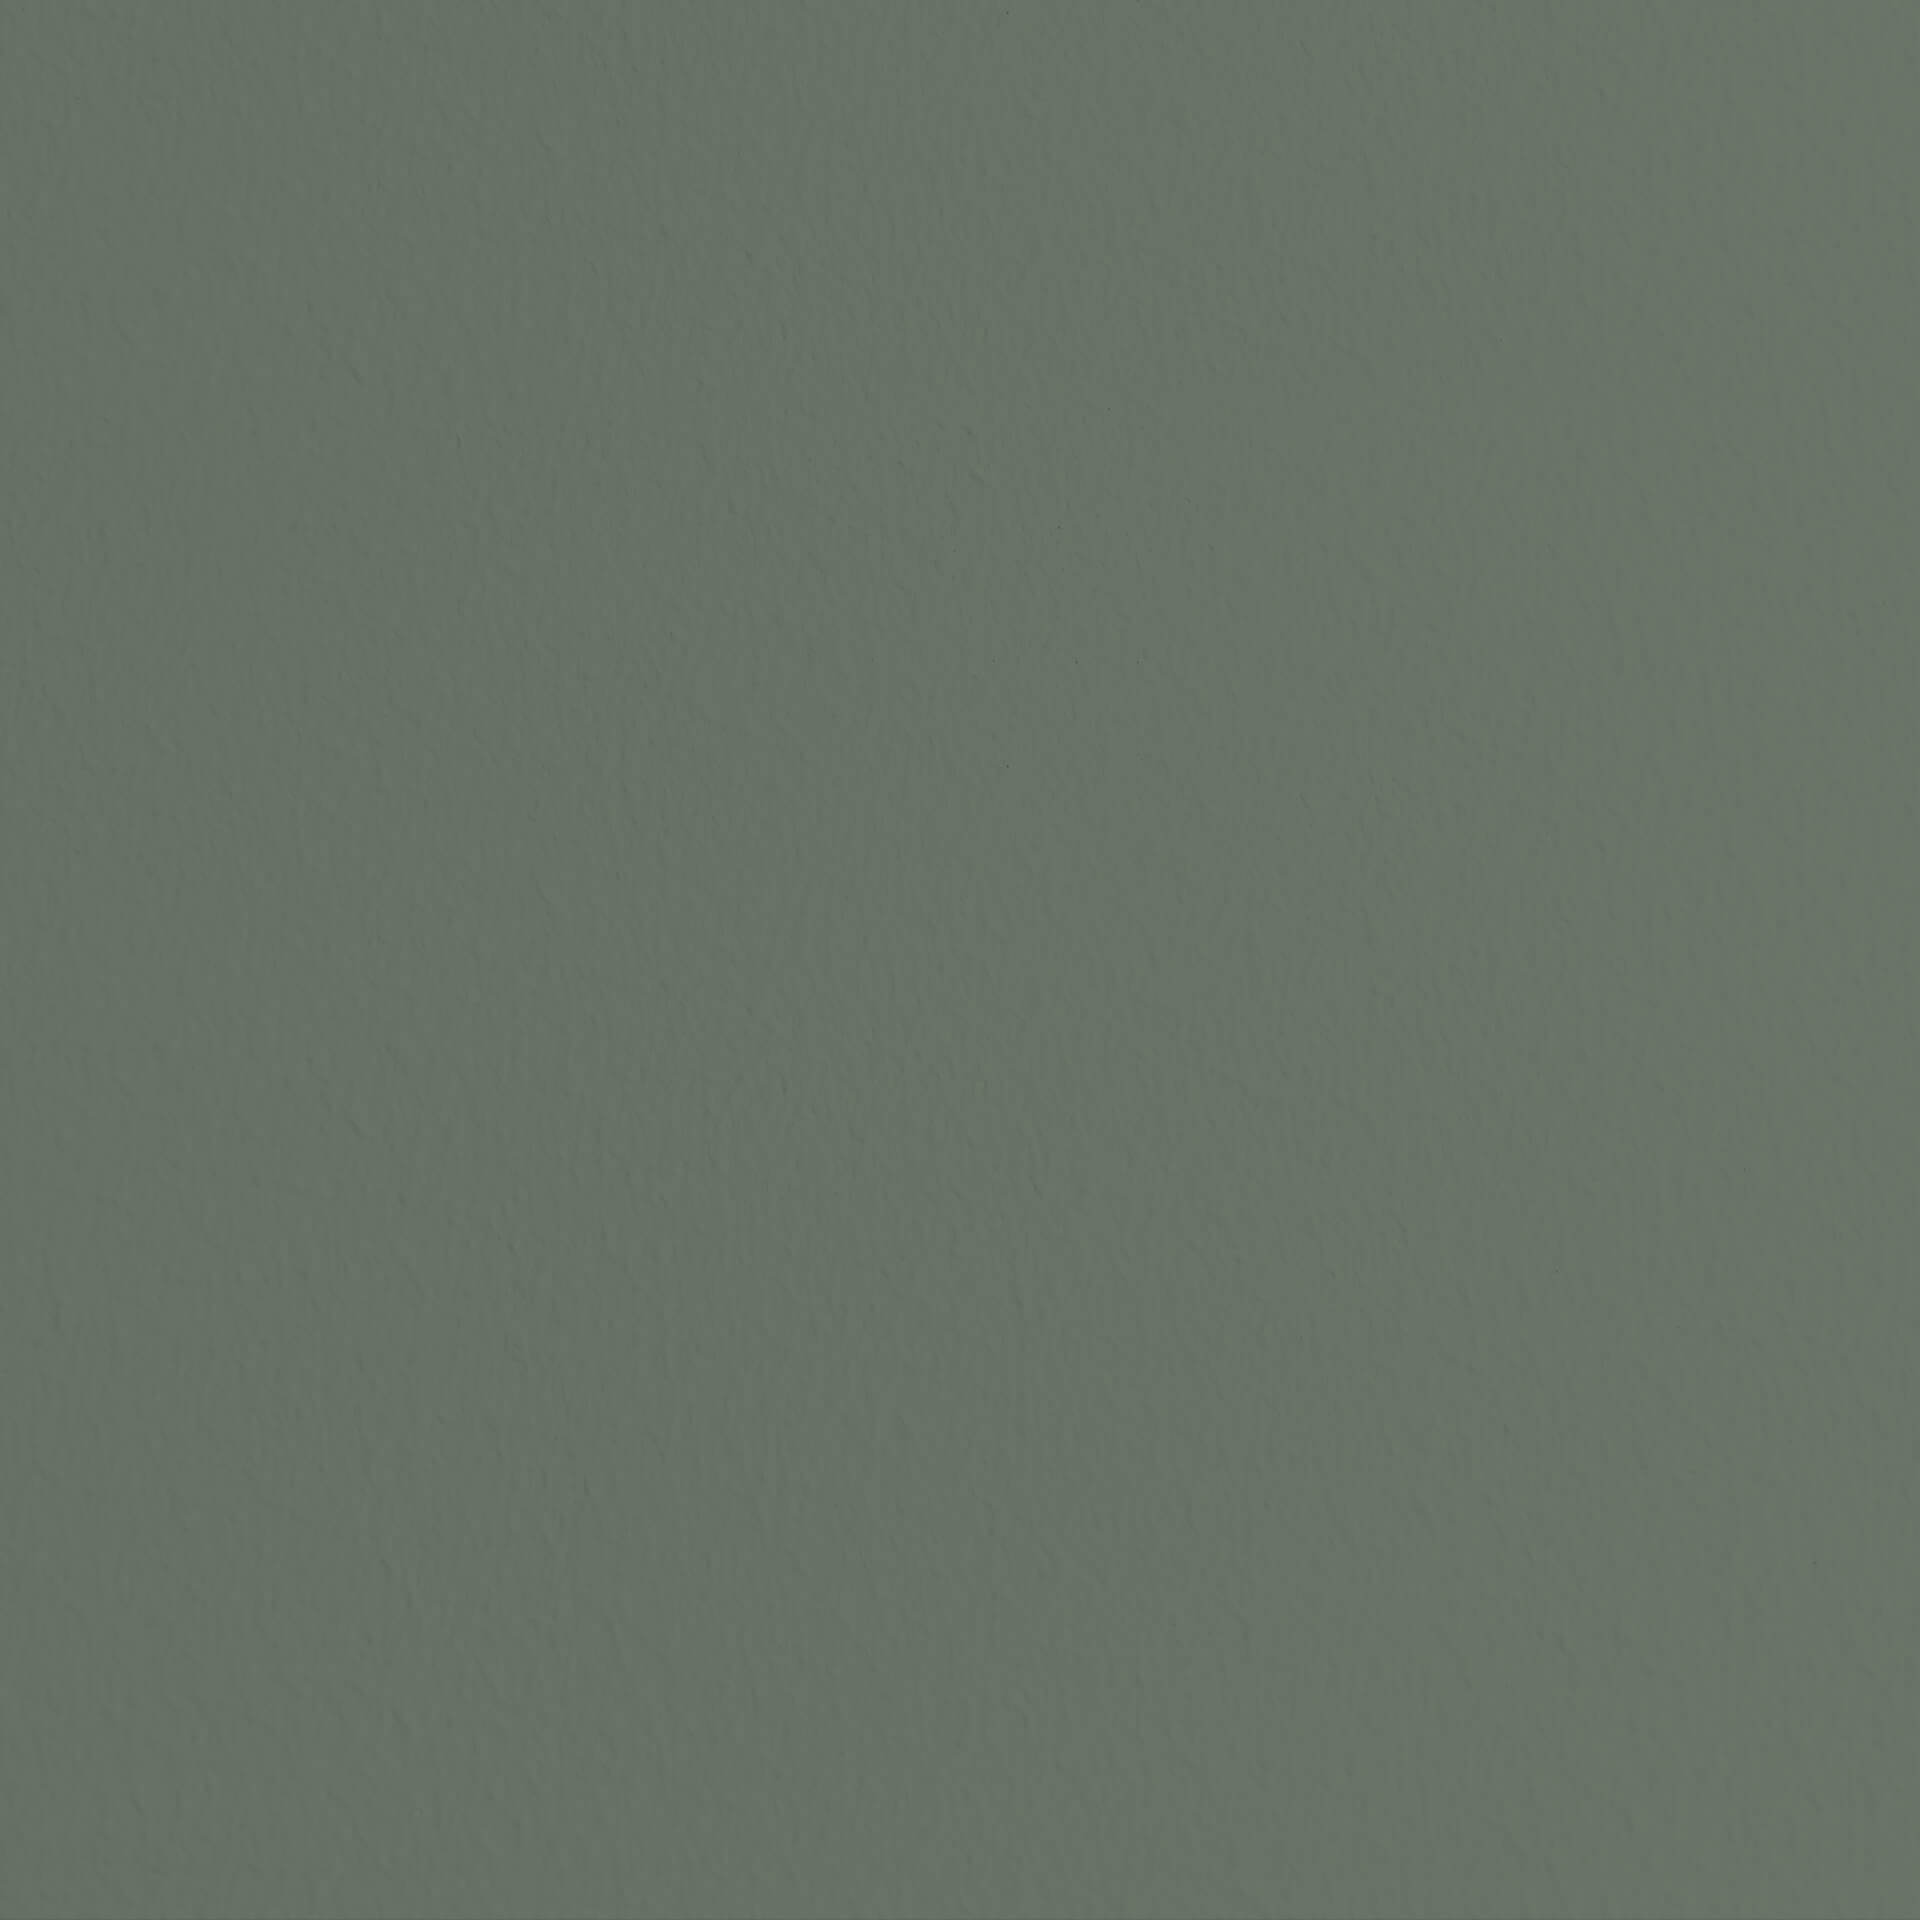 Mylands Myrtle Green No. 168 - Marble Matt Emulsion / Wandfarbe, 2.5L